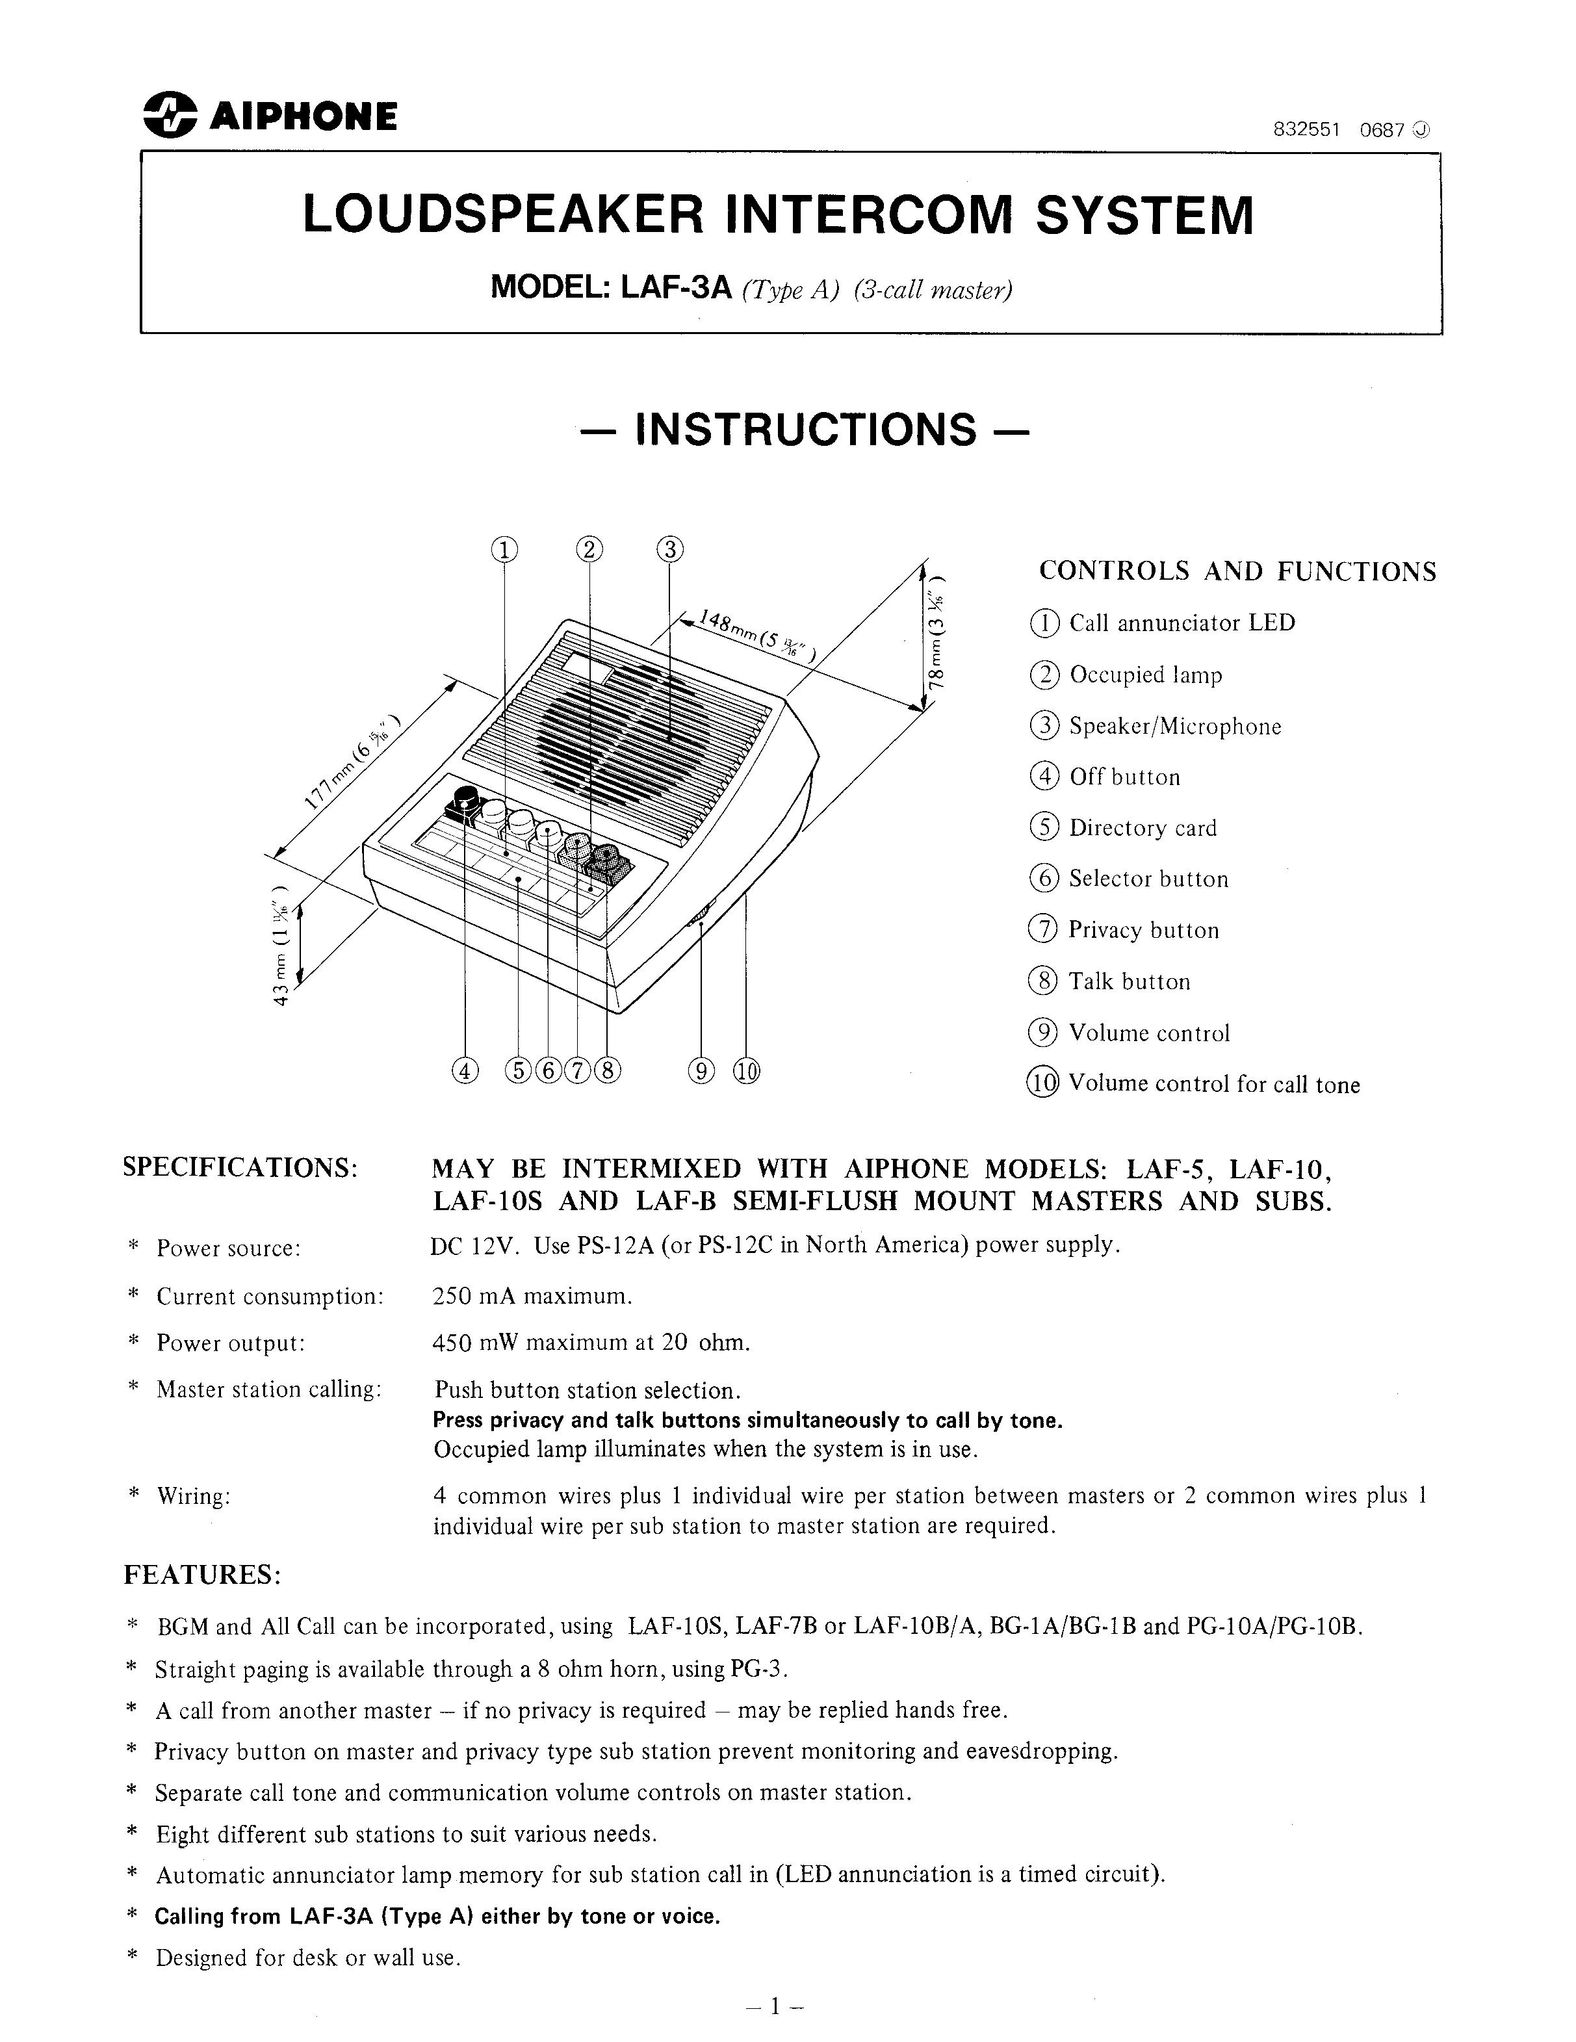 Aiphone LAF-3A IP Phone User Manual